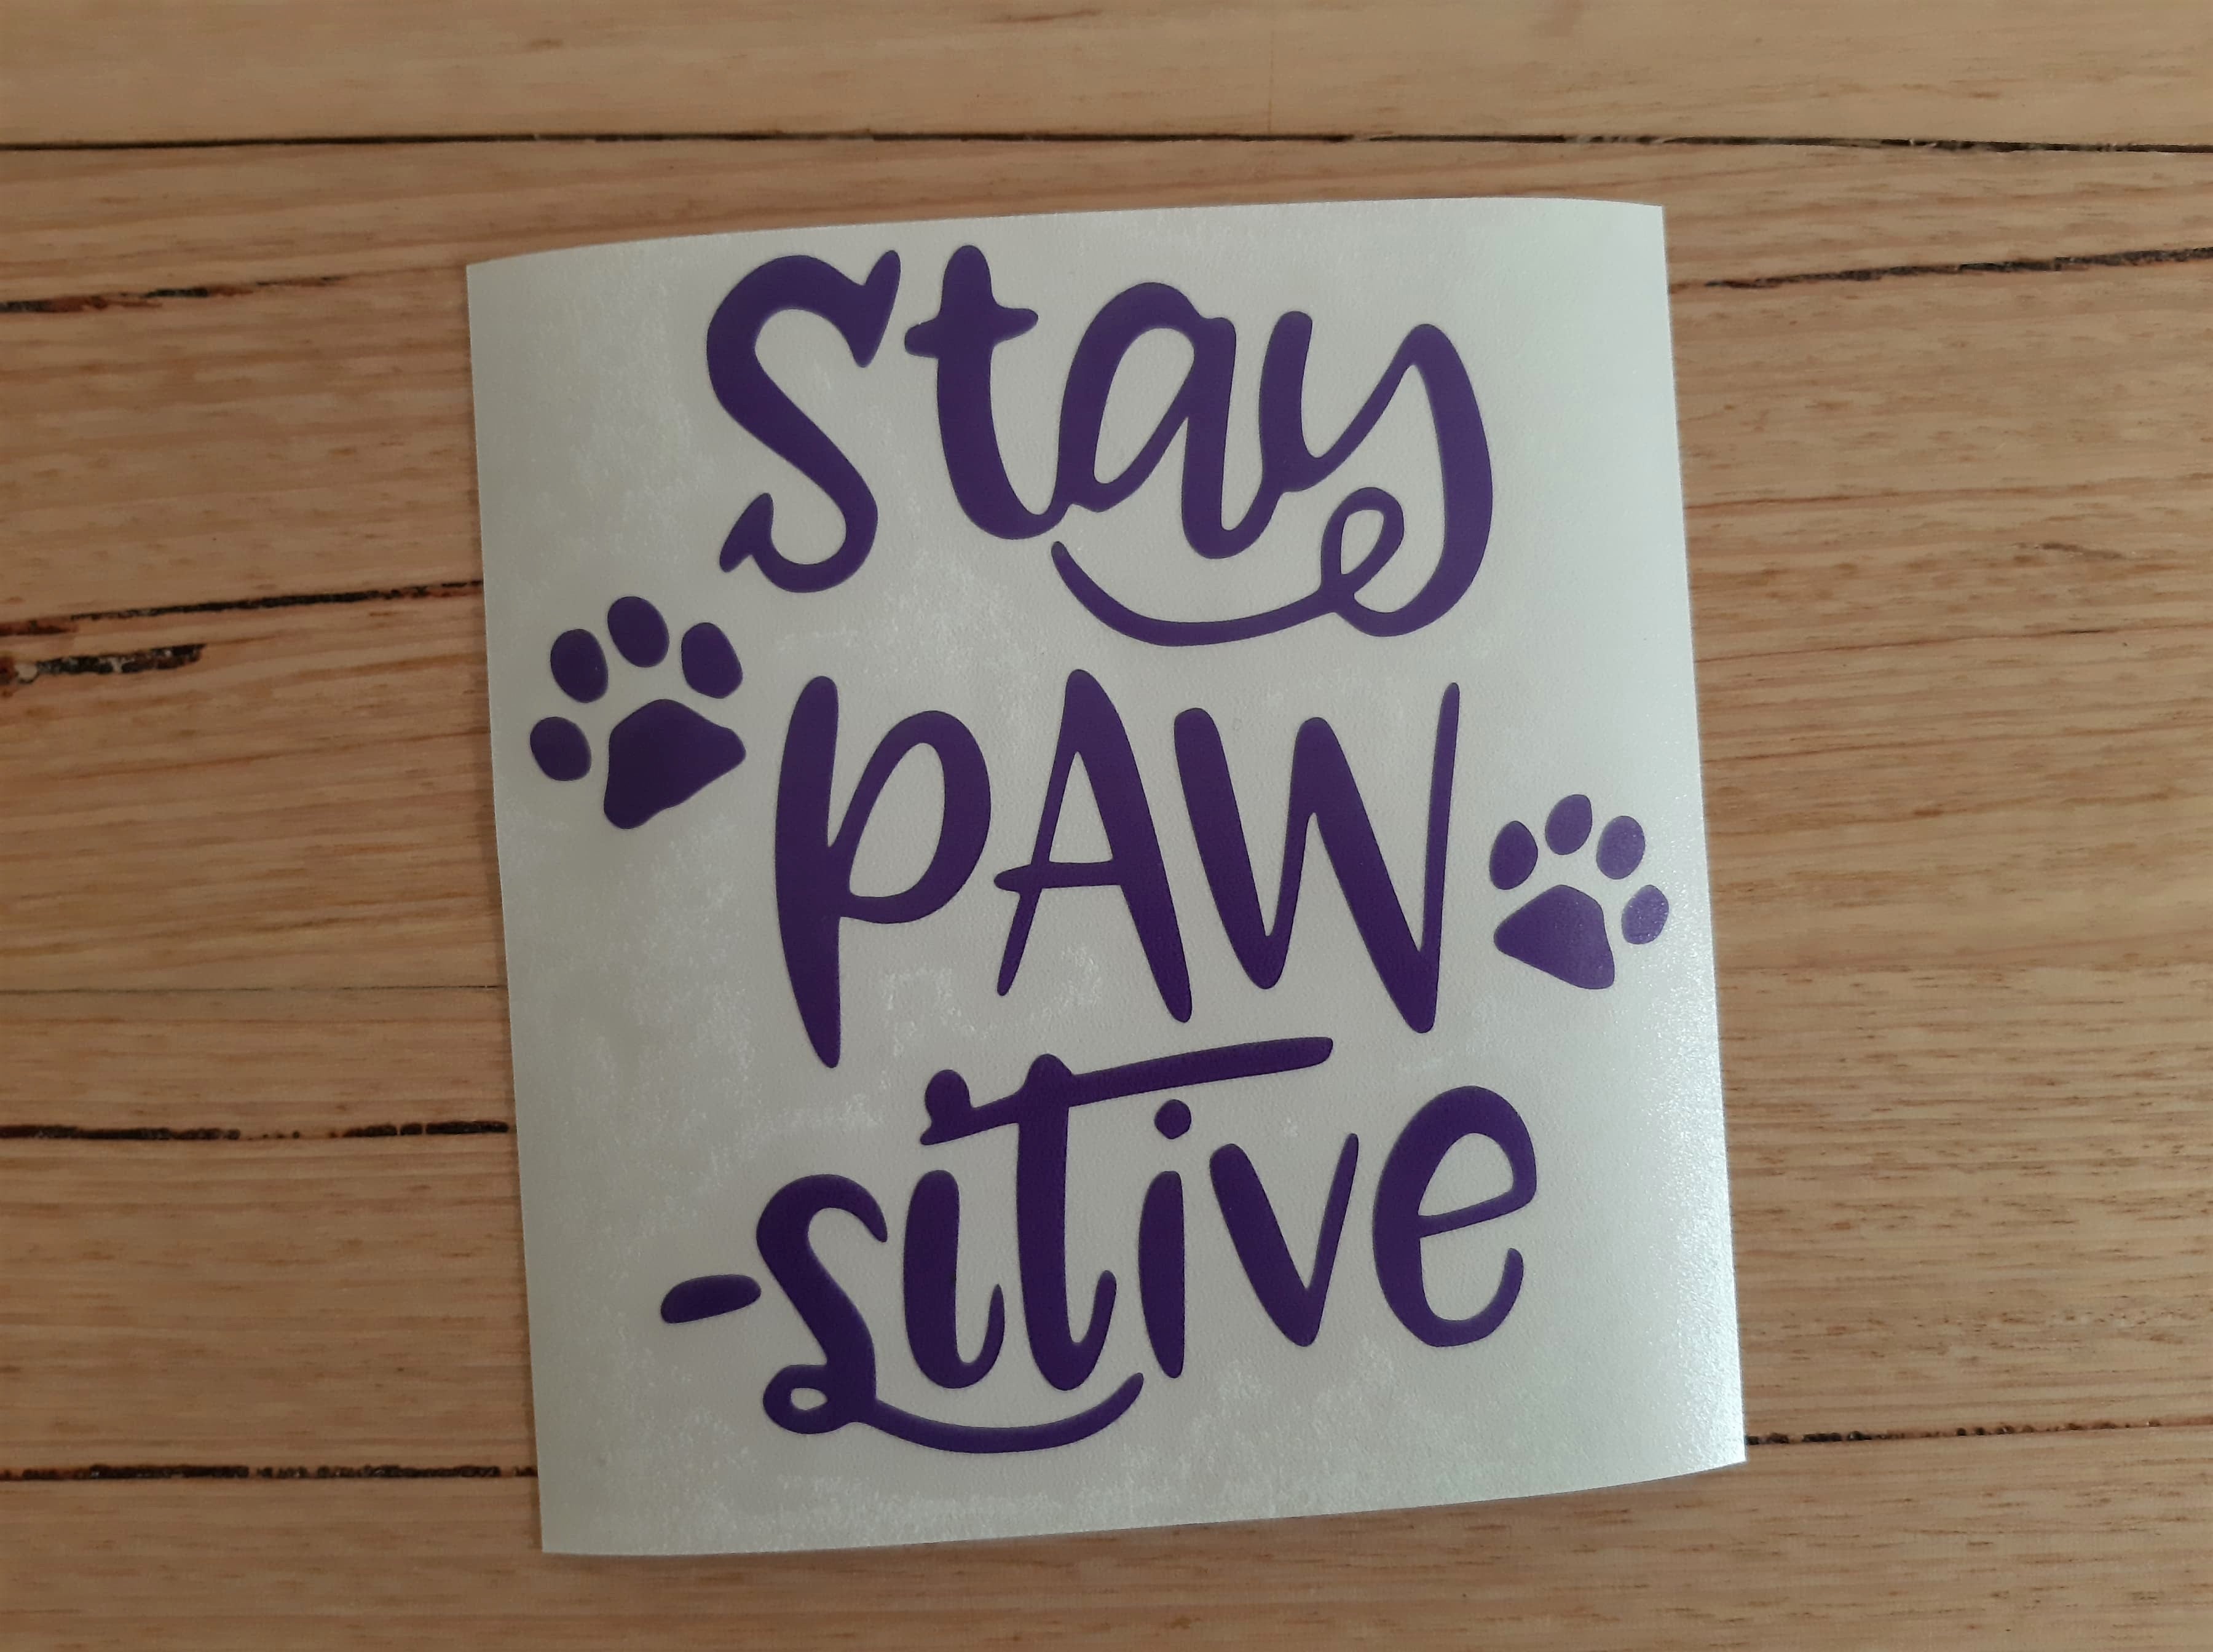 Stay Paw-sitive Dog Car Decal Sticker, Positive Motivational Dog Sticker, Vinyl Window Cute,  Dog lover gift, Best gift dog friend - My Crafty Dog